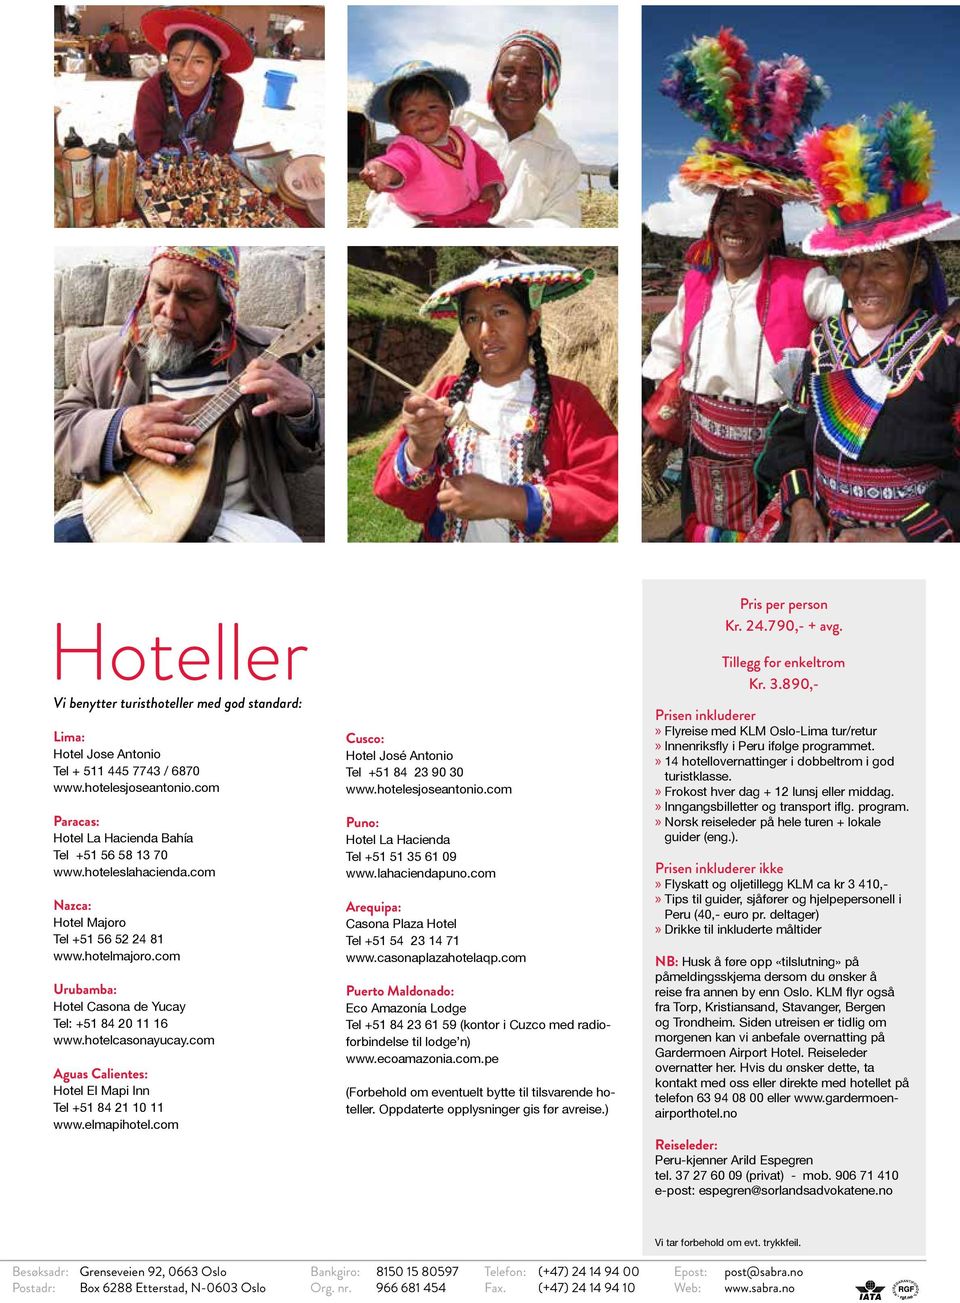 com Aguas Calientes: Hotel El Mapi Inn Tel +51 84 21 10 11 www.elmapihotel.com Cusco: Hotel José Antonio Tel +51 84 23 90 30 www.hotelesjoseantonio.com Puno: Hotel La Hacienda Tel +51 51 35 61 09 www.